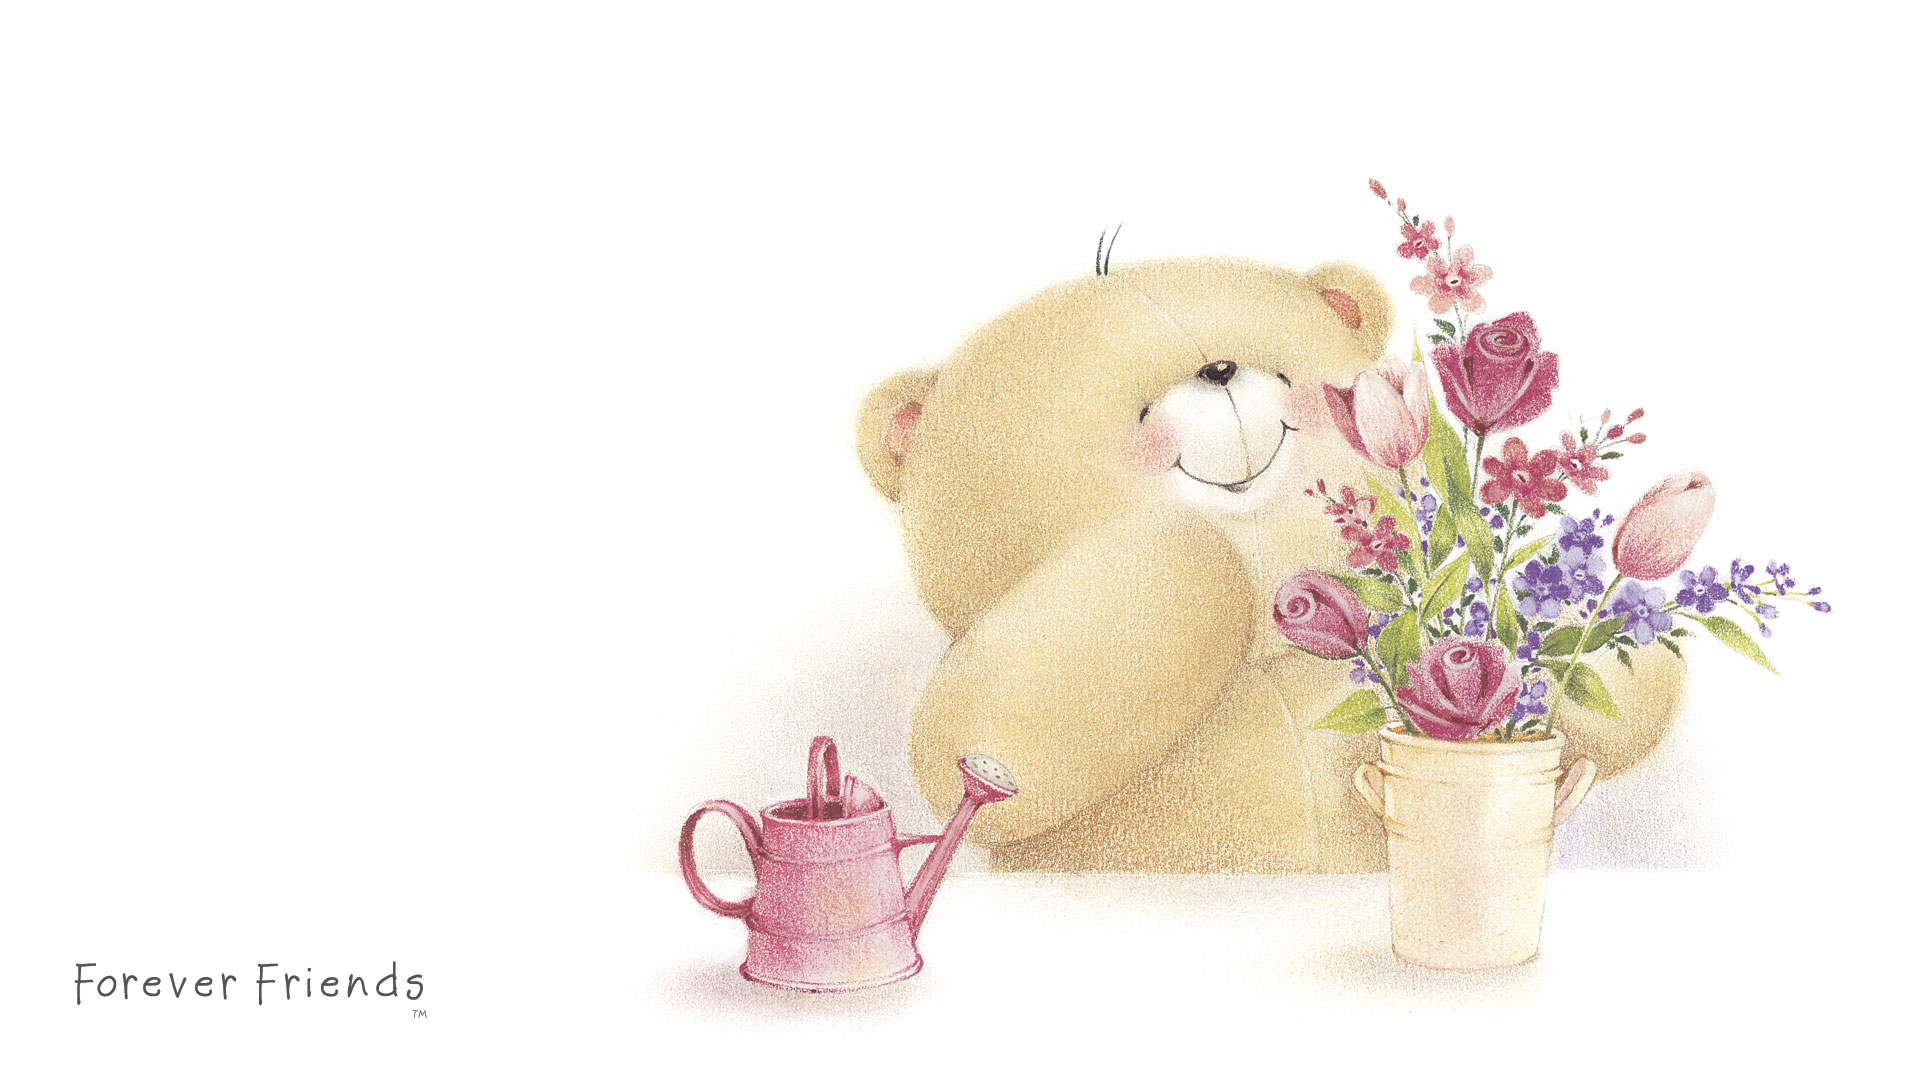 sweet wallpapers for friends,pink,teacup,teddy bear,cut flowers,stuffed toy